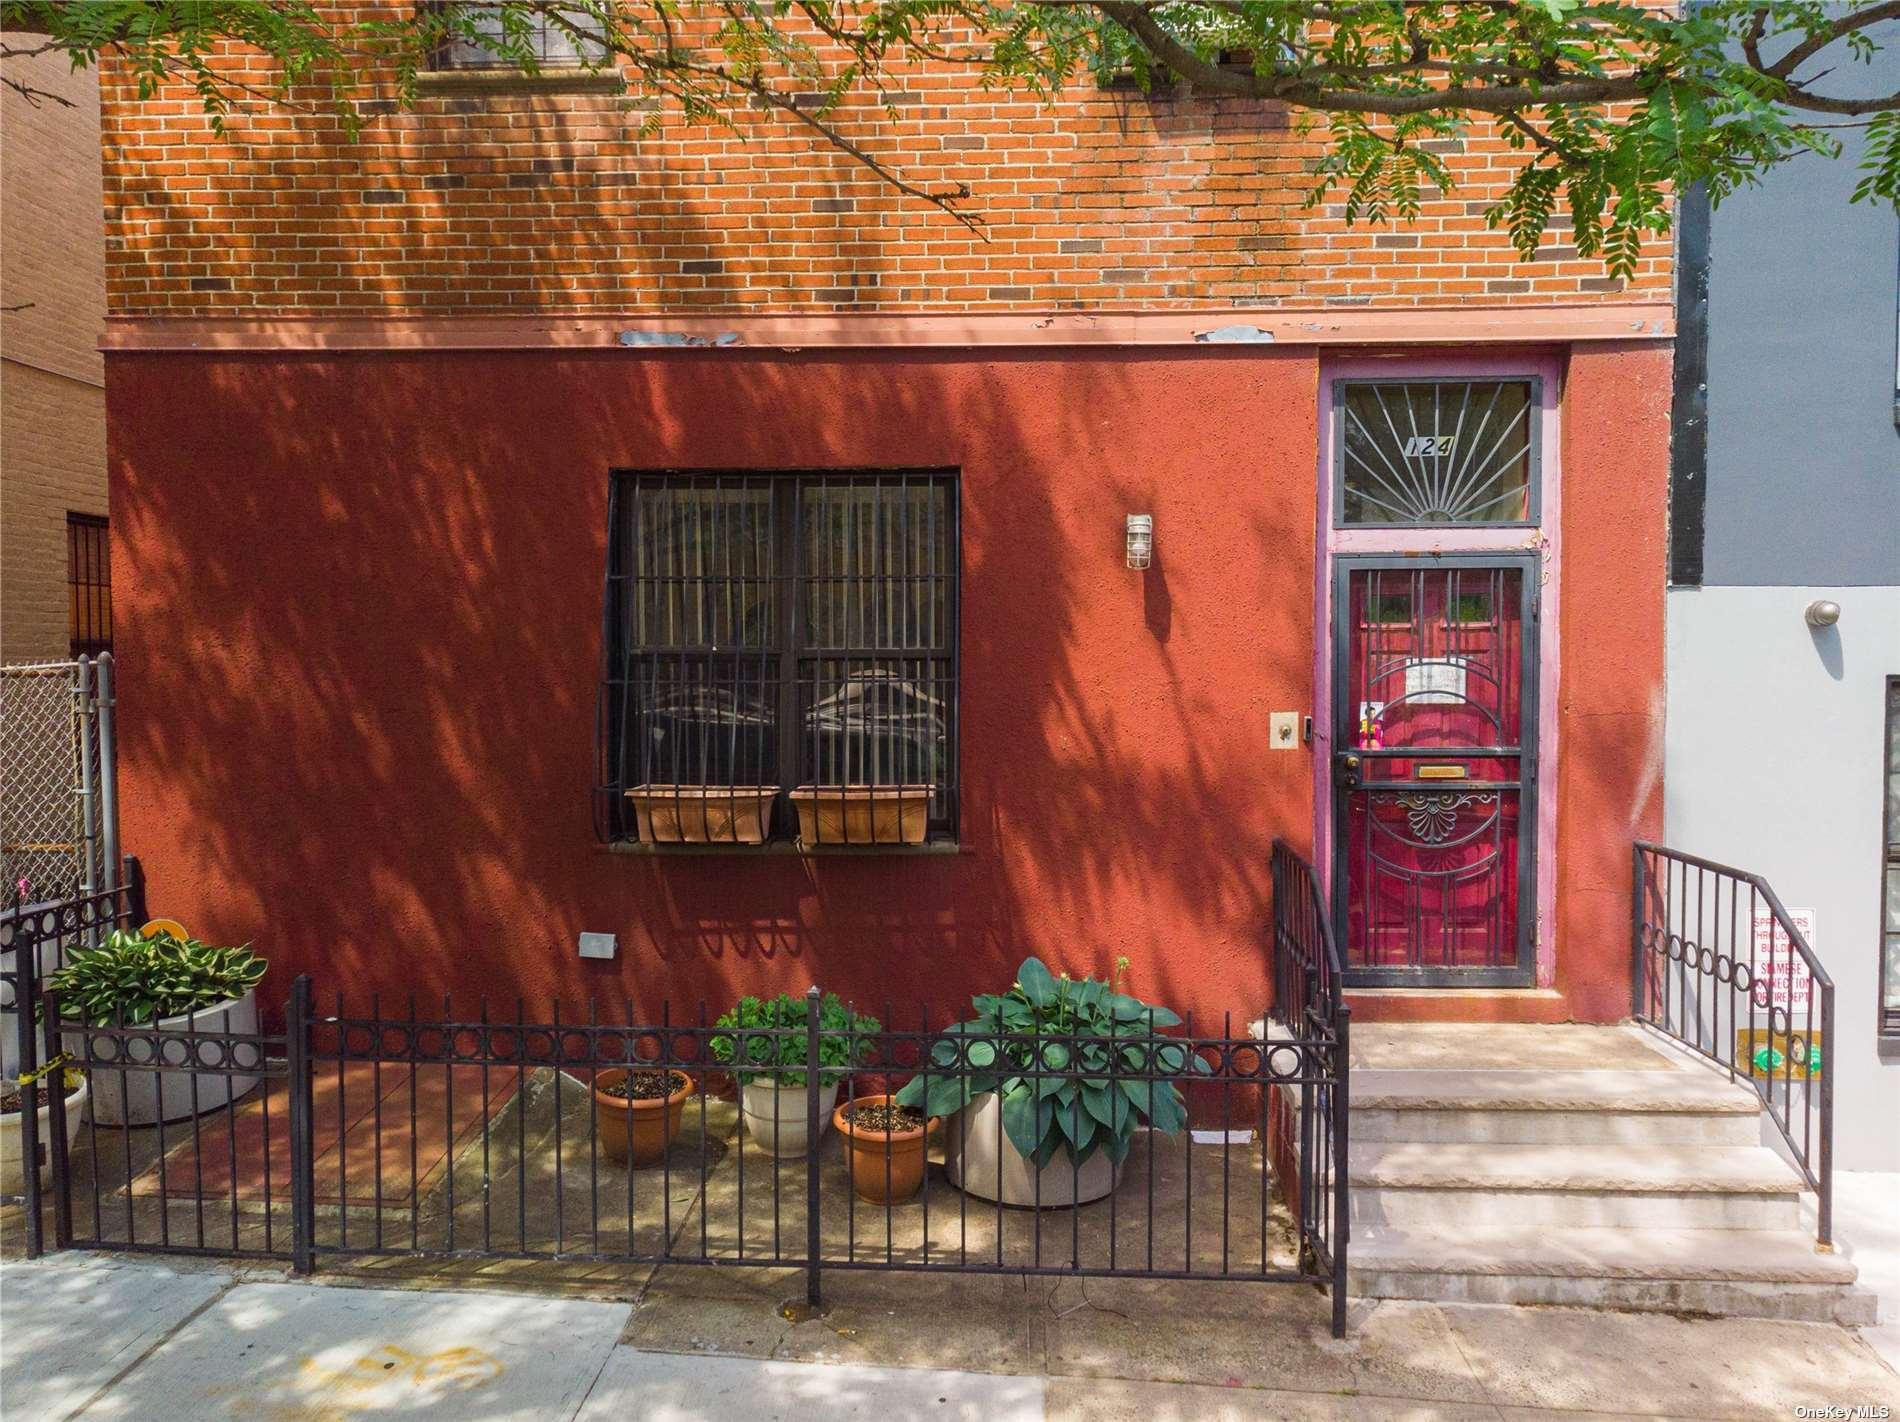 124 Thomas S Boyland Street in Brooklyn, Brooklyn, NY 11233